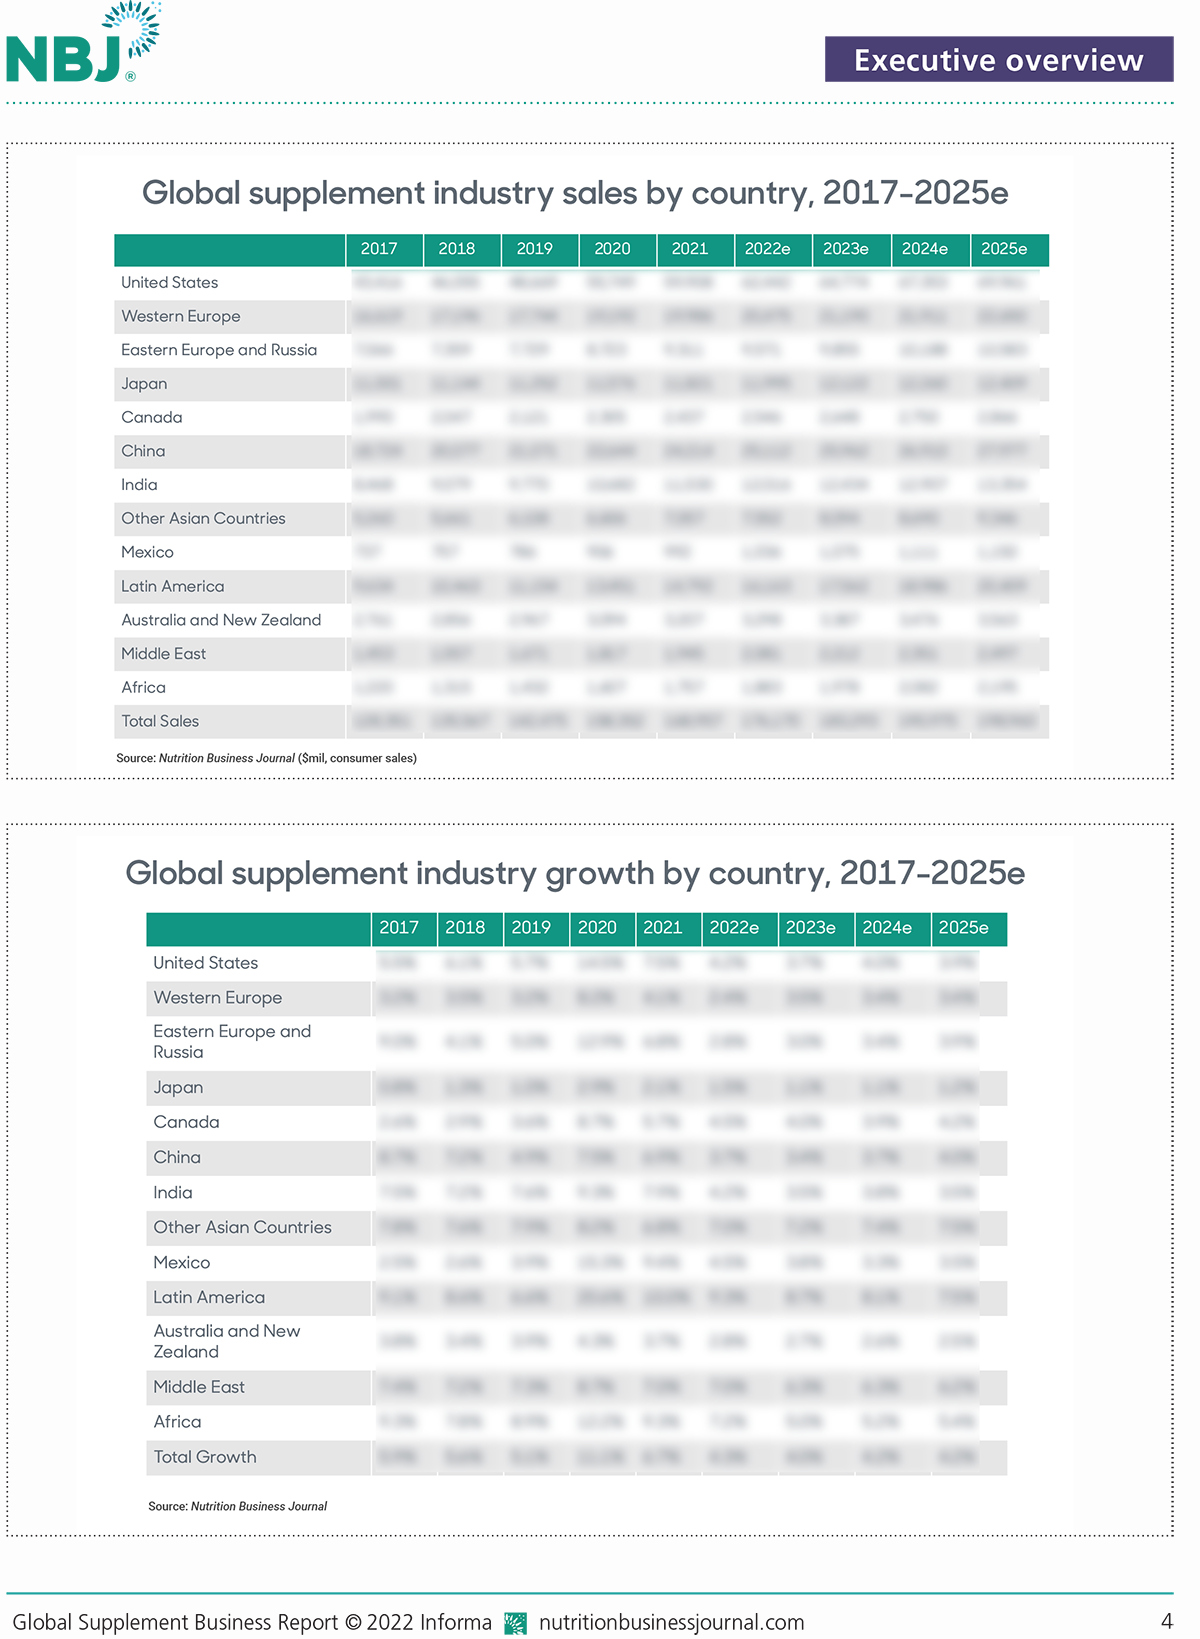 Global Supplement Business Report 2022